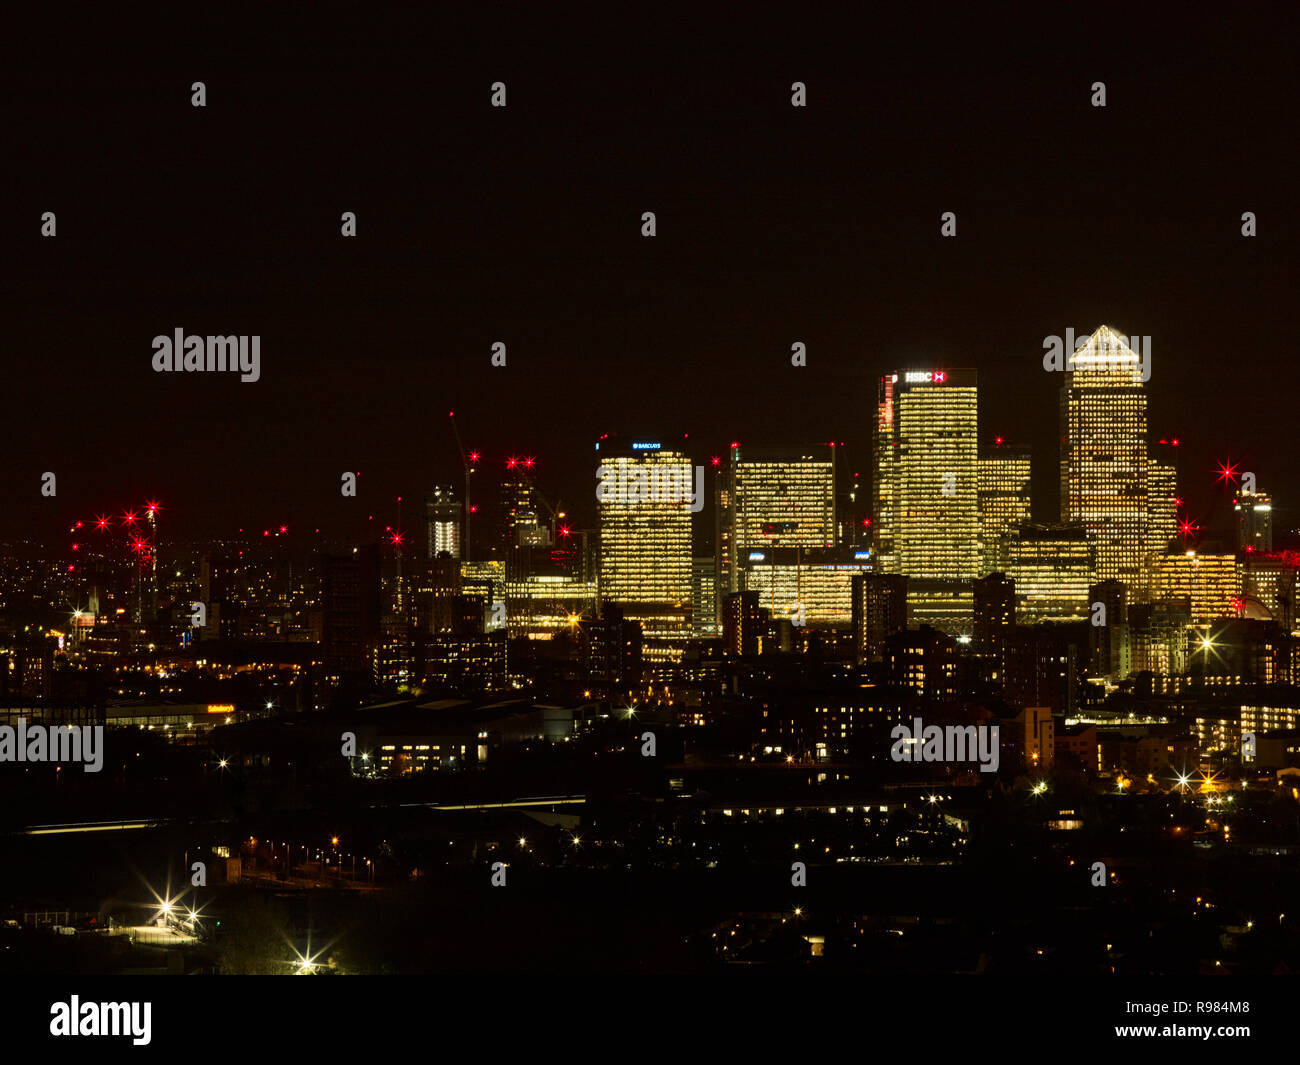 London city skyline view at night Stock Photo - Alamy